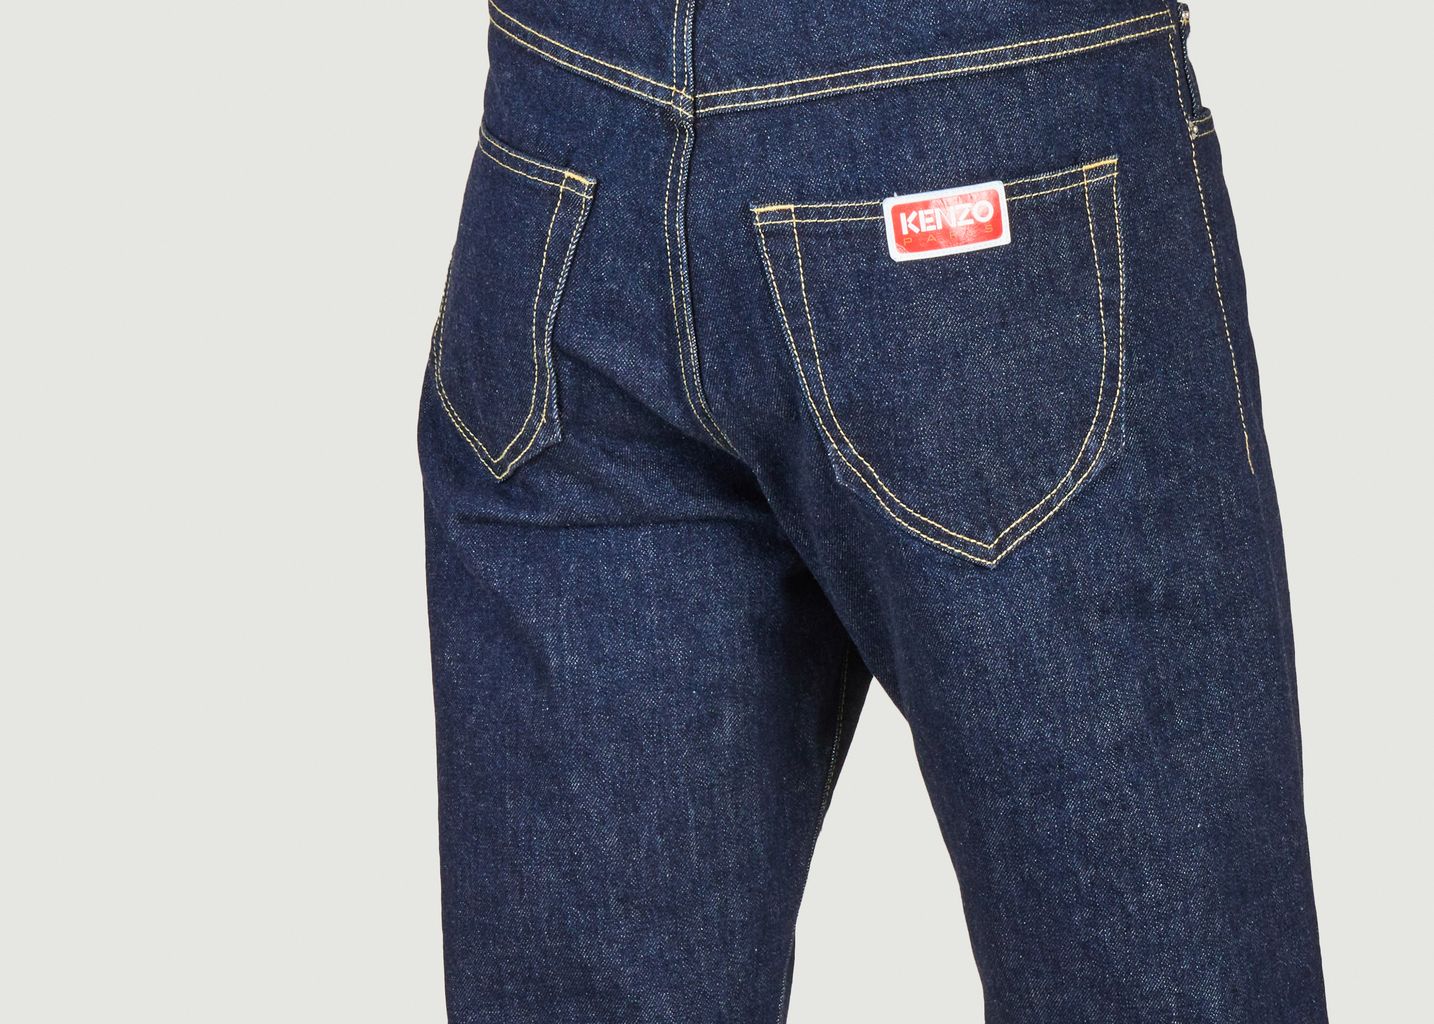 Asagao straight cut jeans - Kenzo